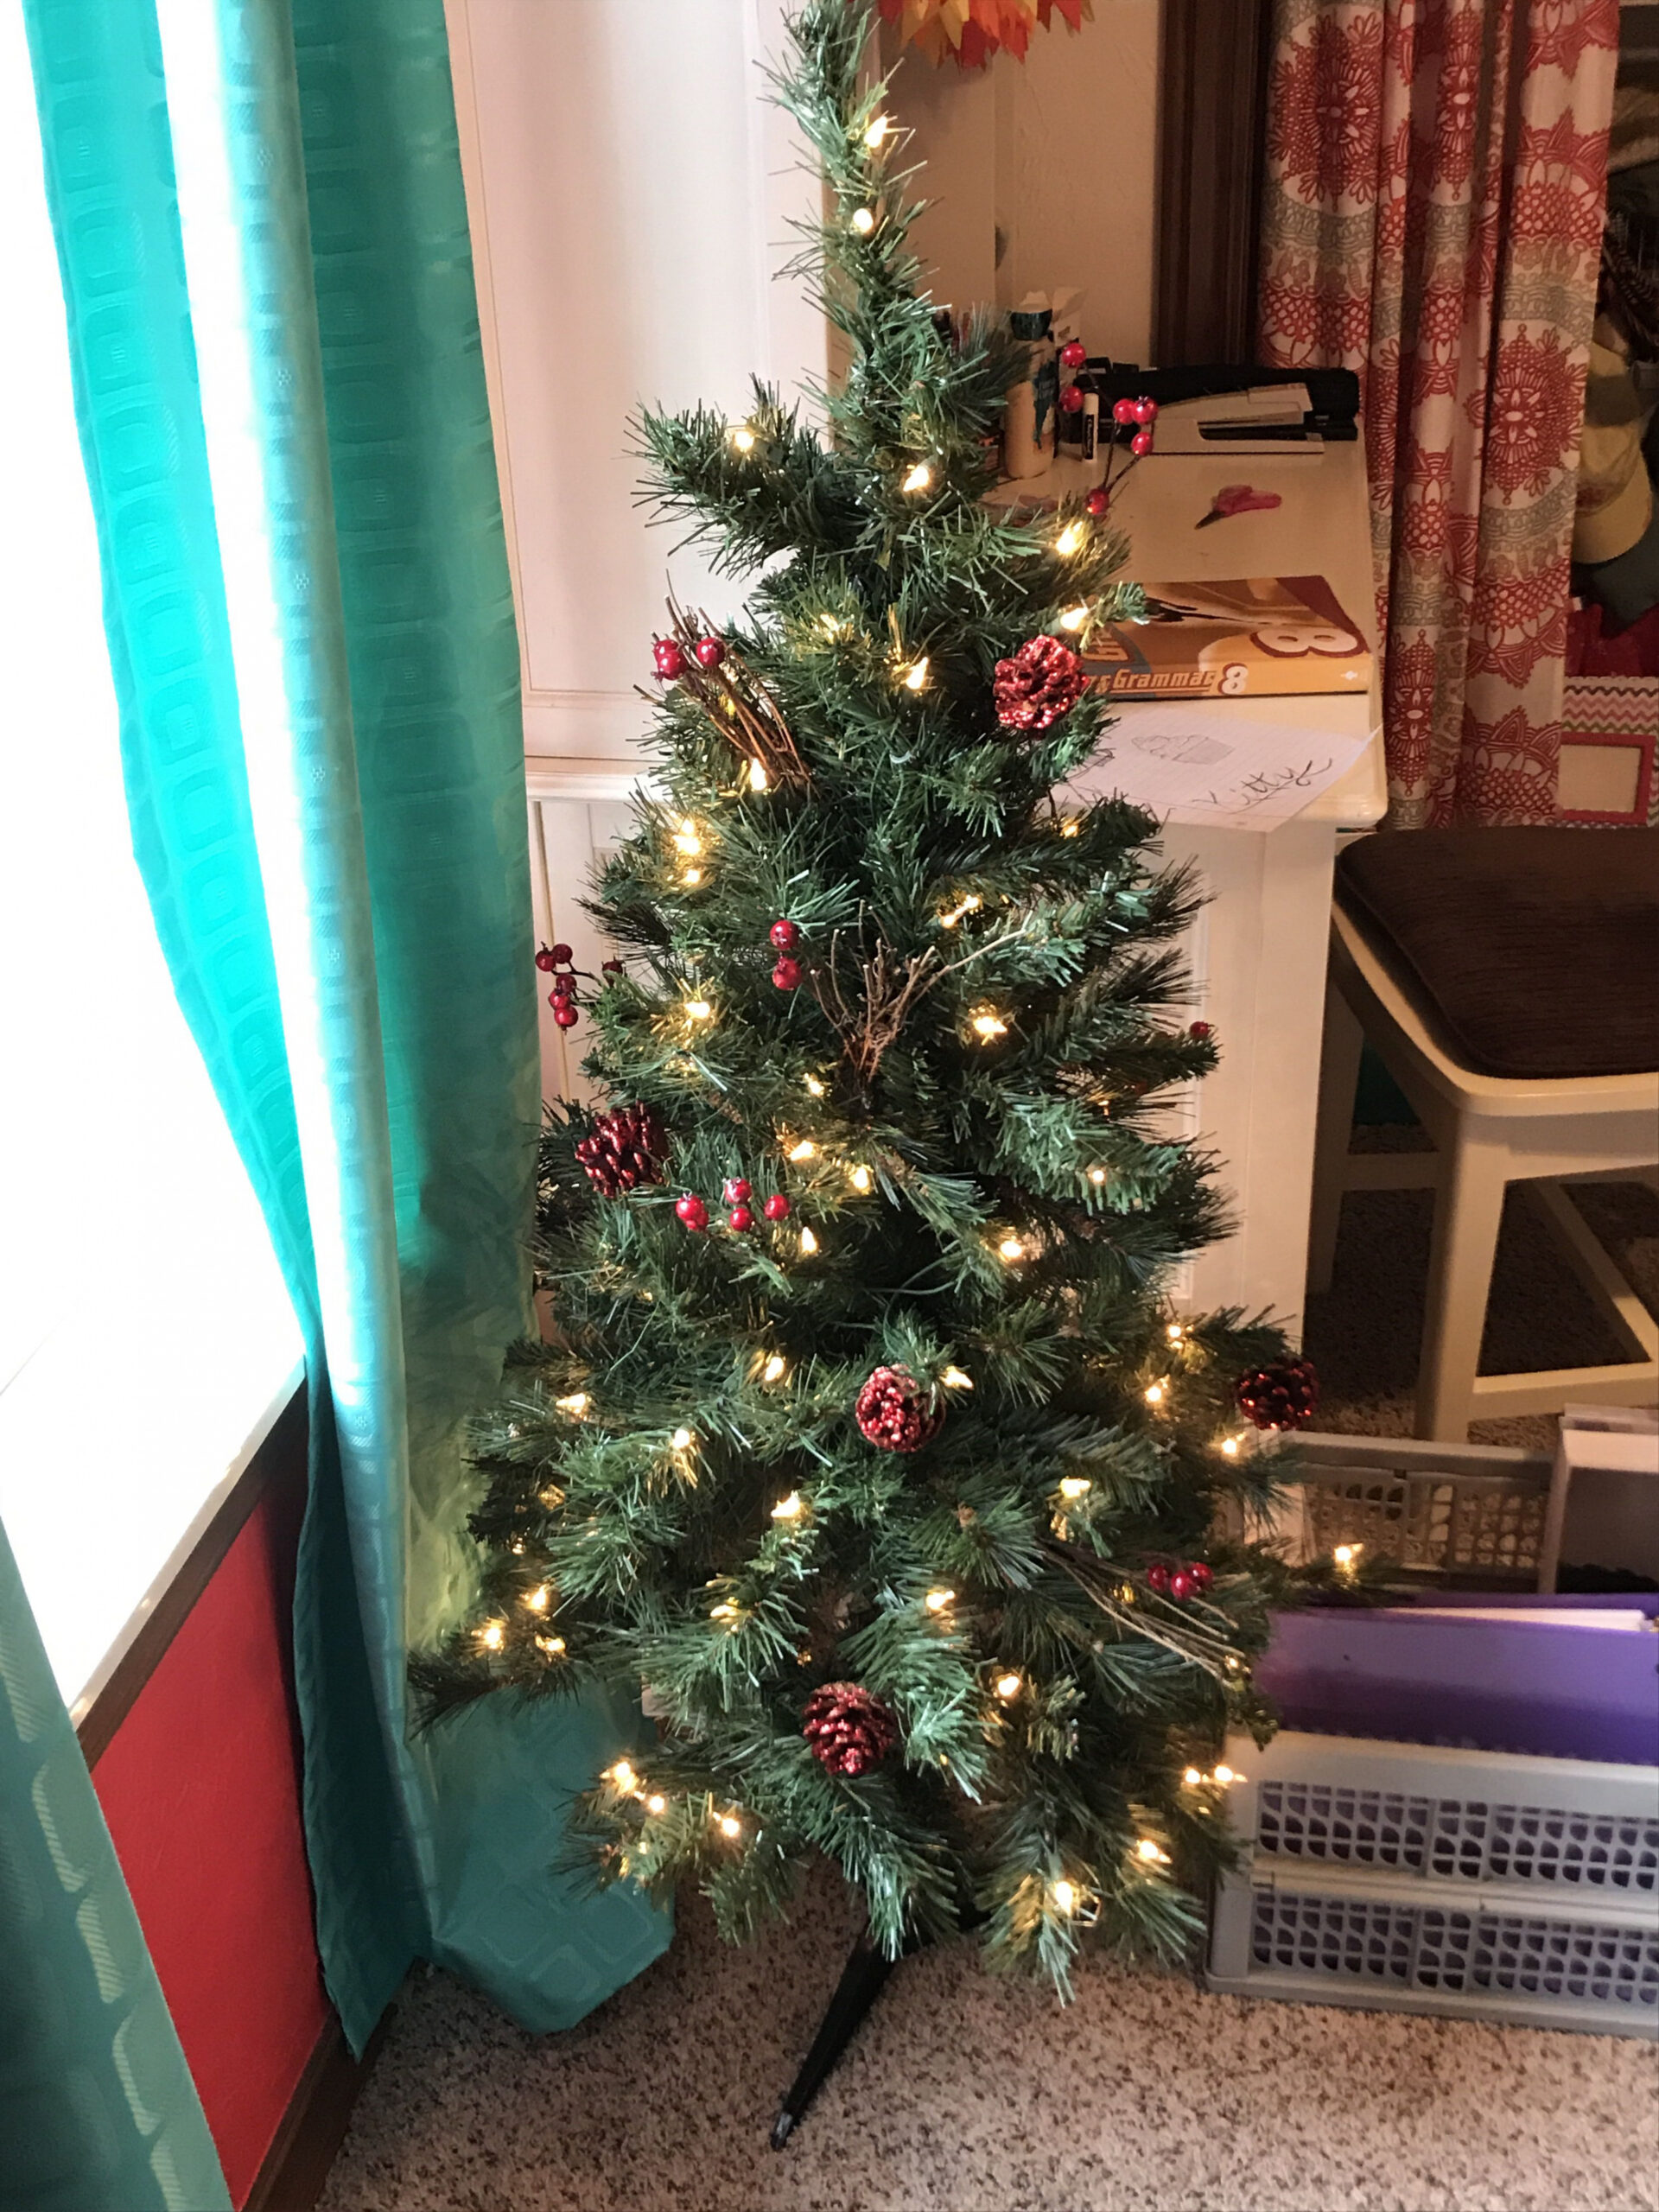 ft tall mini Christmas tree